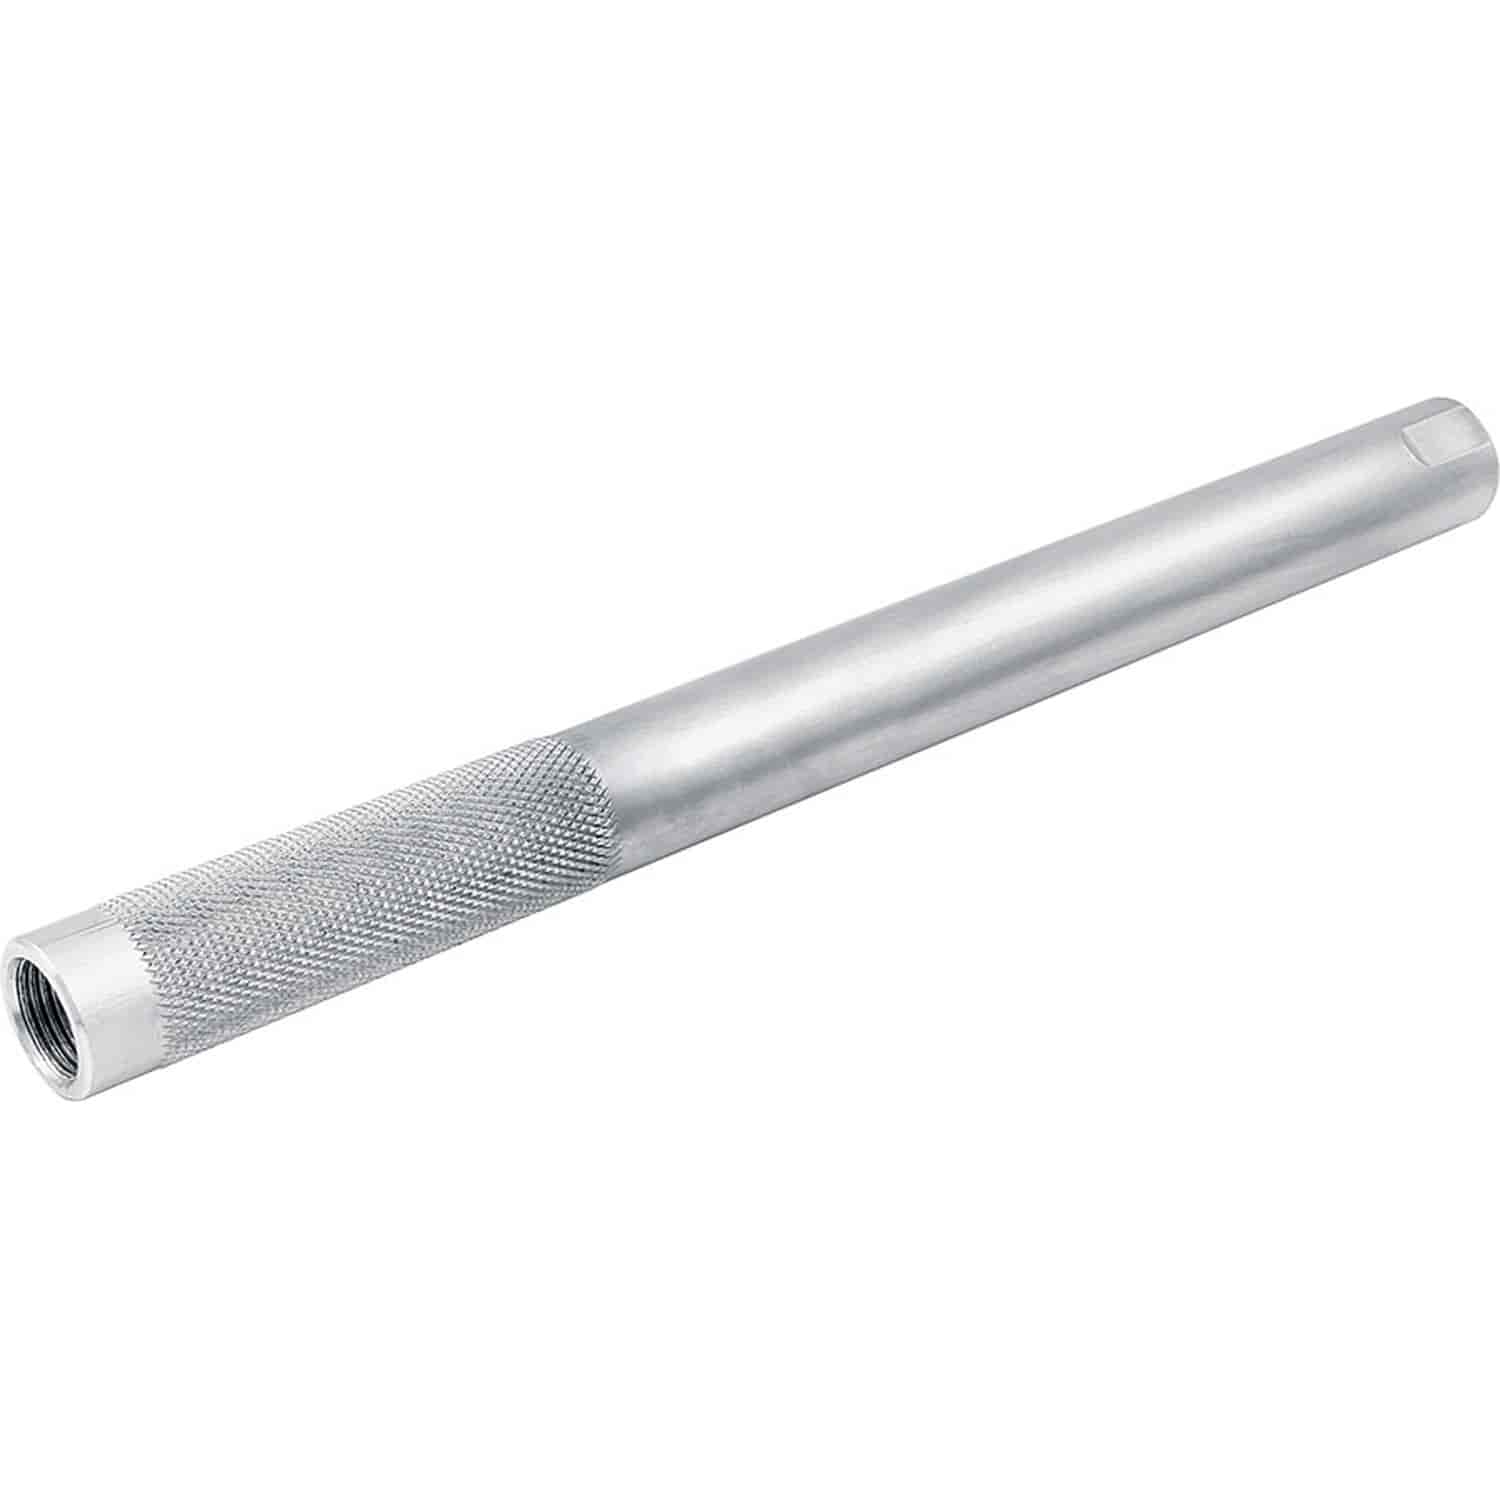 Swedged Aluminum Tie Rod Tube Length: 8"